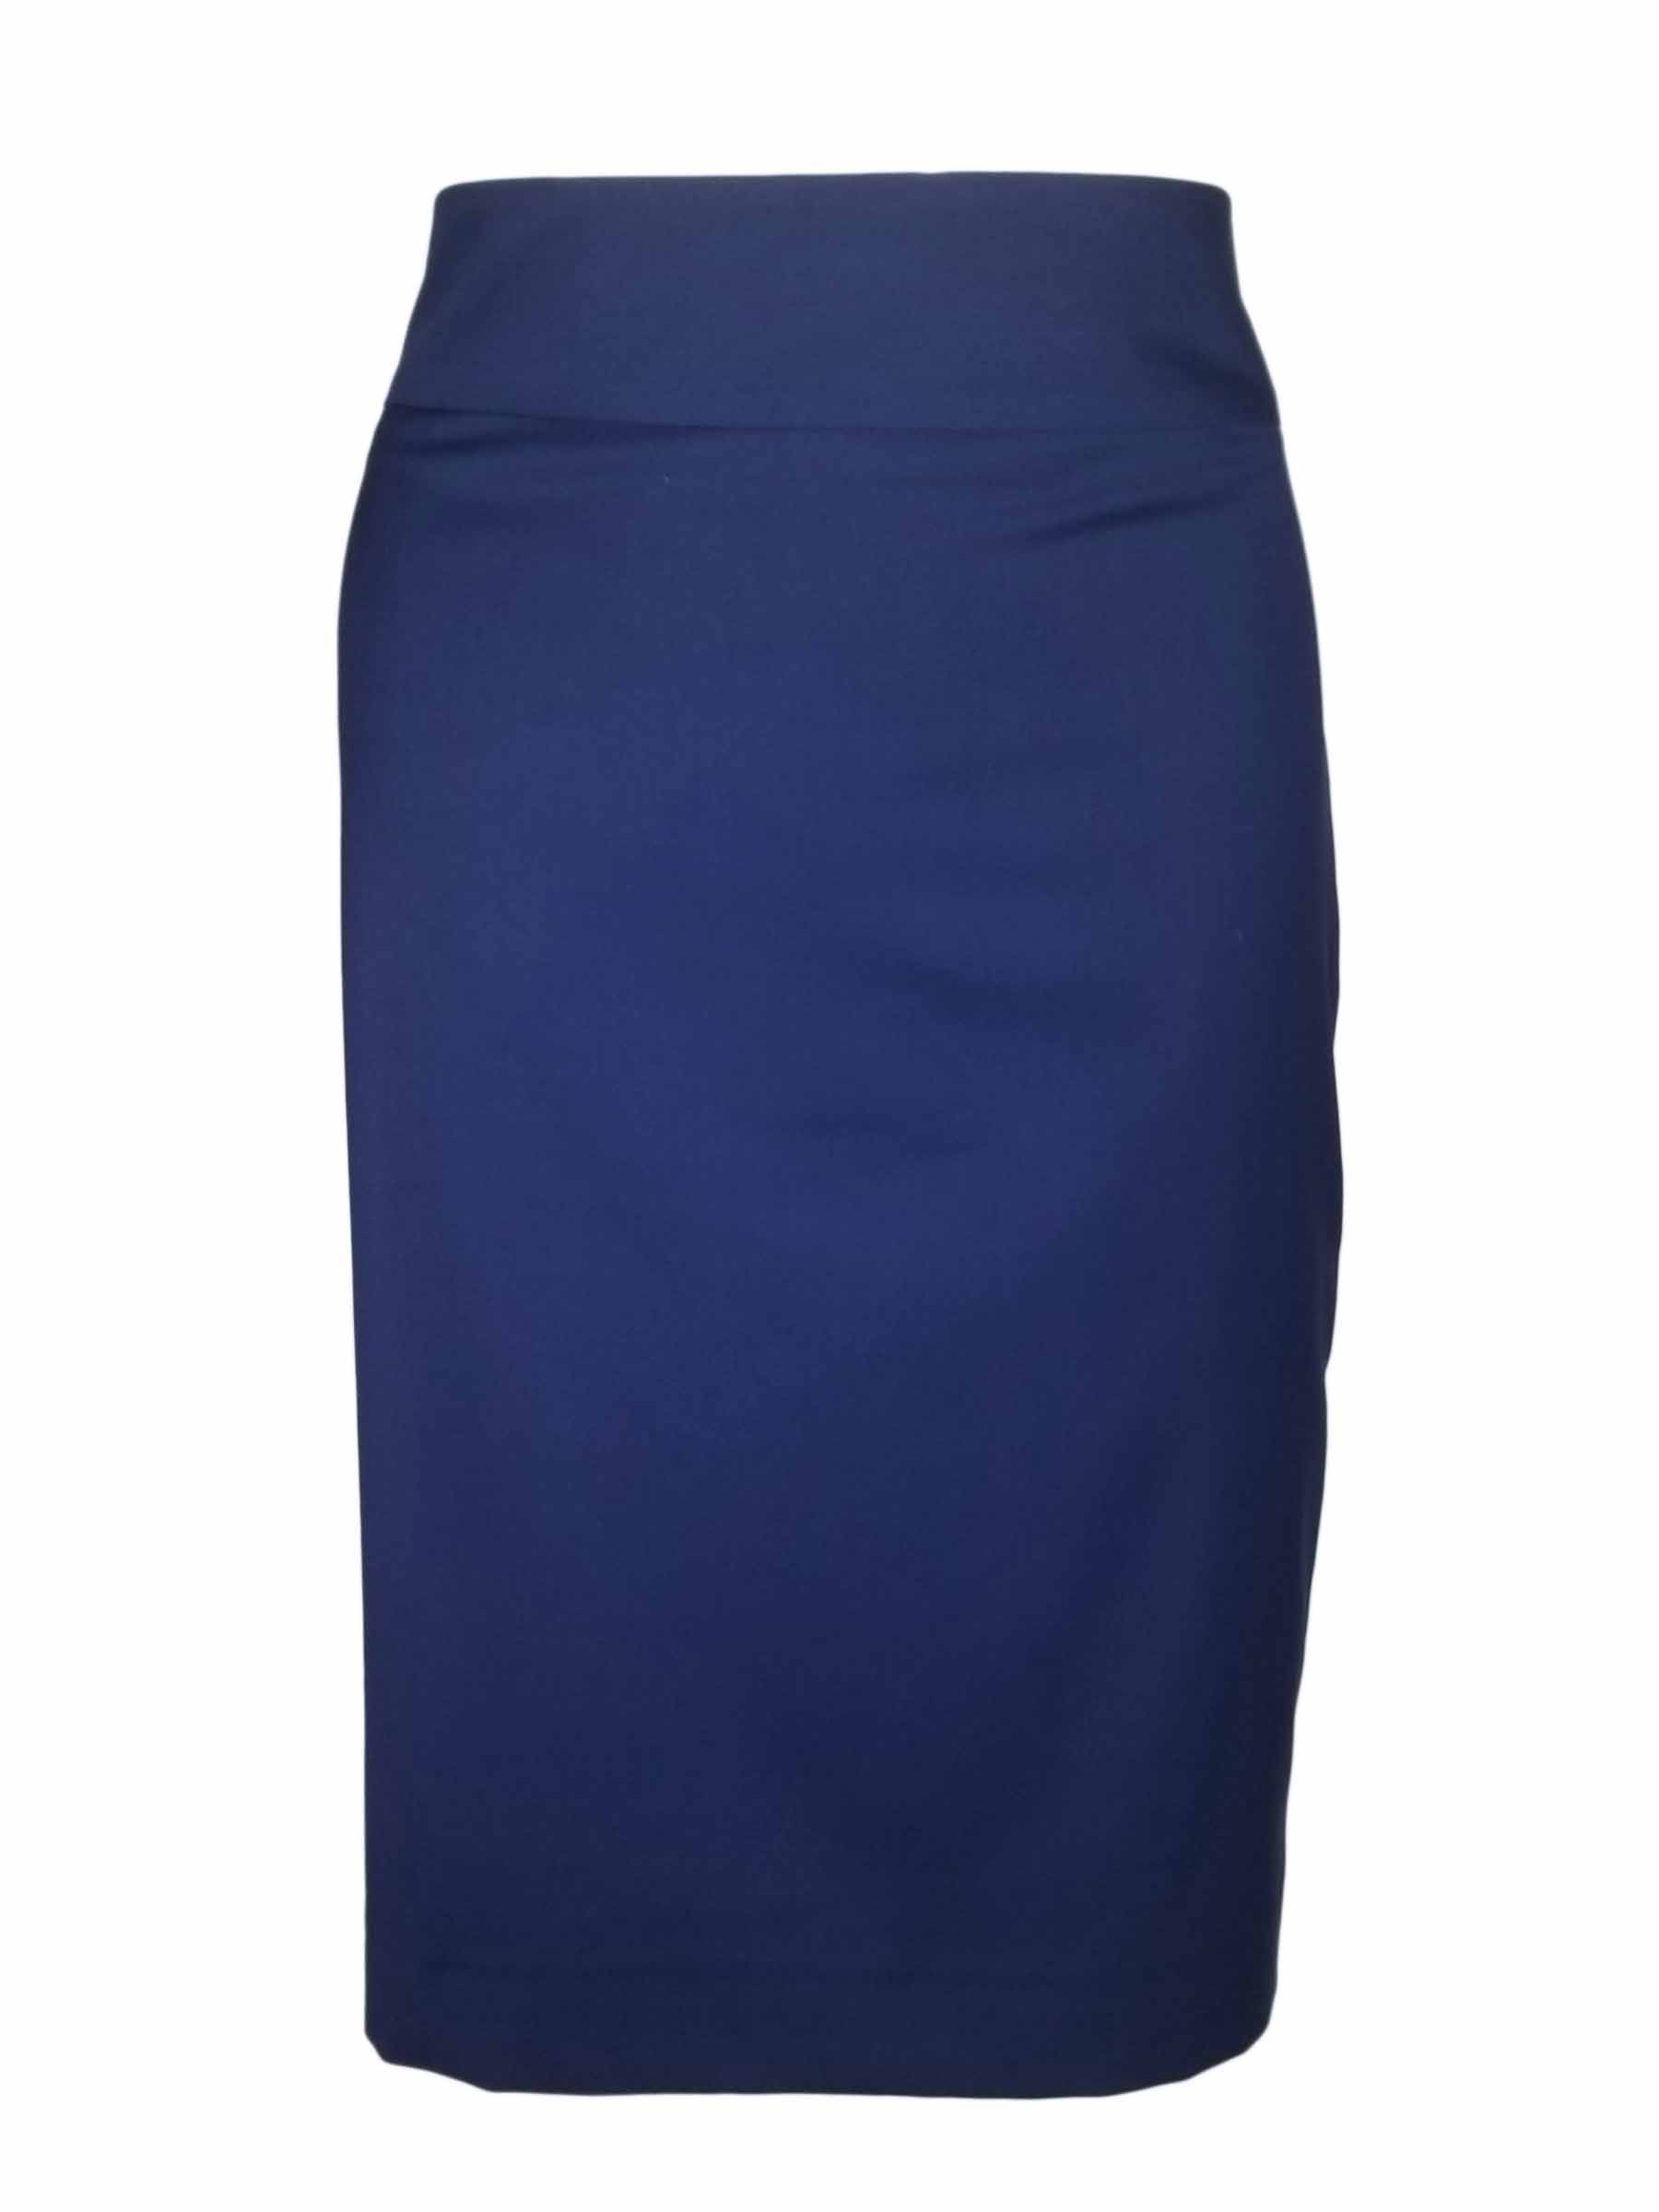 Straight Custom Skirt - Royal Wool Blend - Uniform Edit